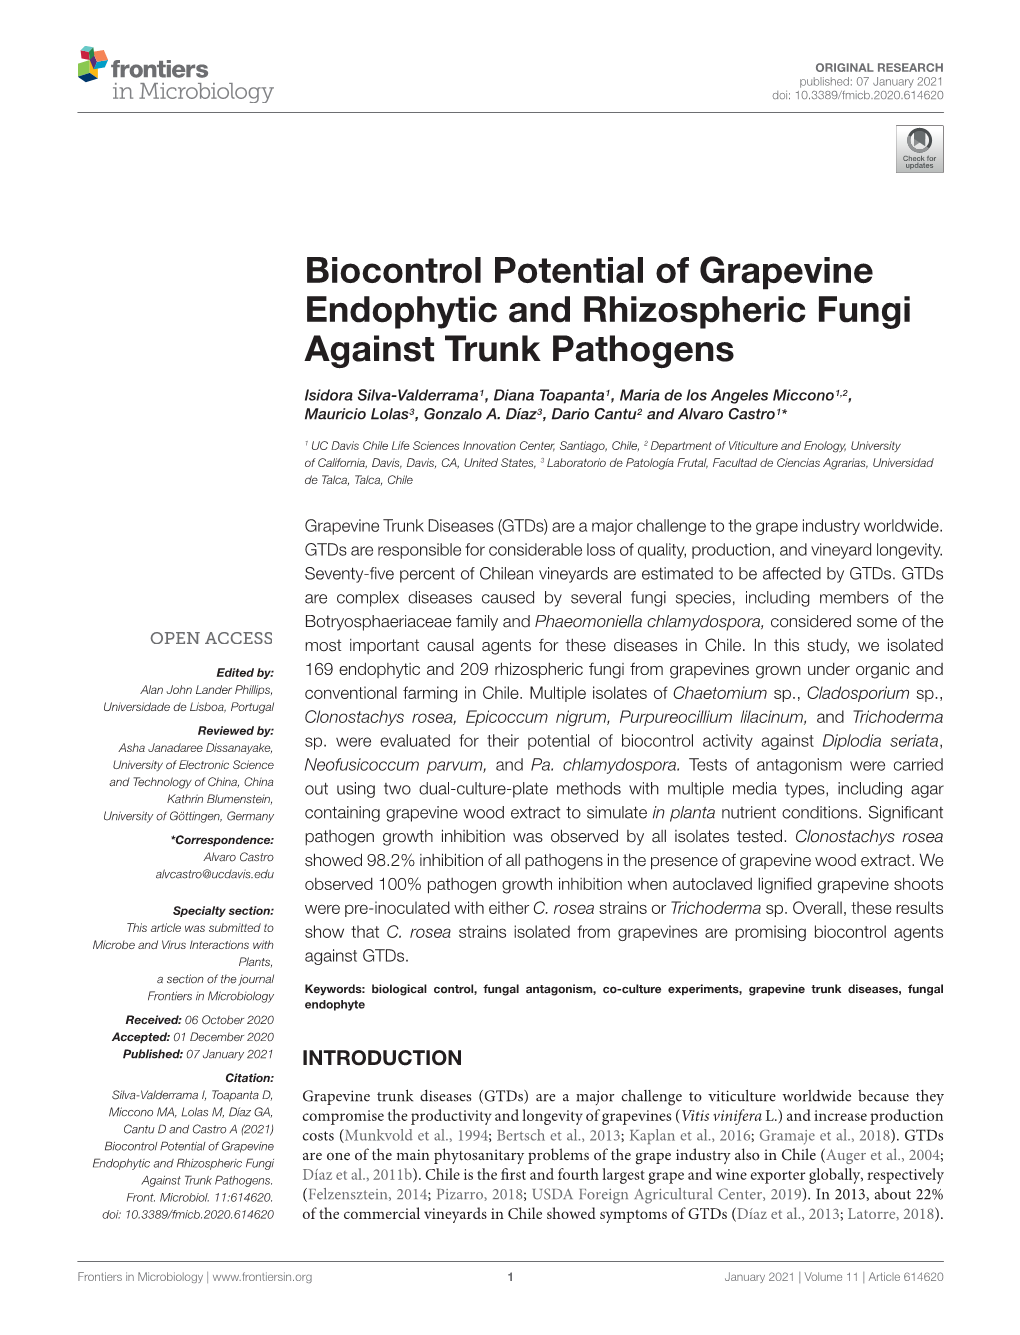 Biocontrol Potential of Grapevine Endophytic and Rhizospheric Fungi Against Trunk Pathogens